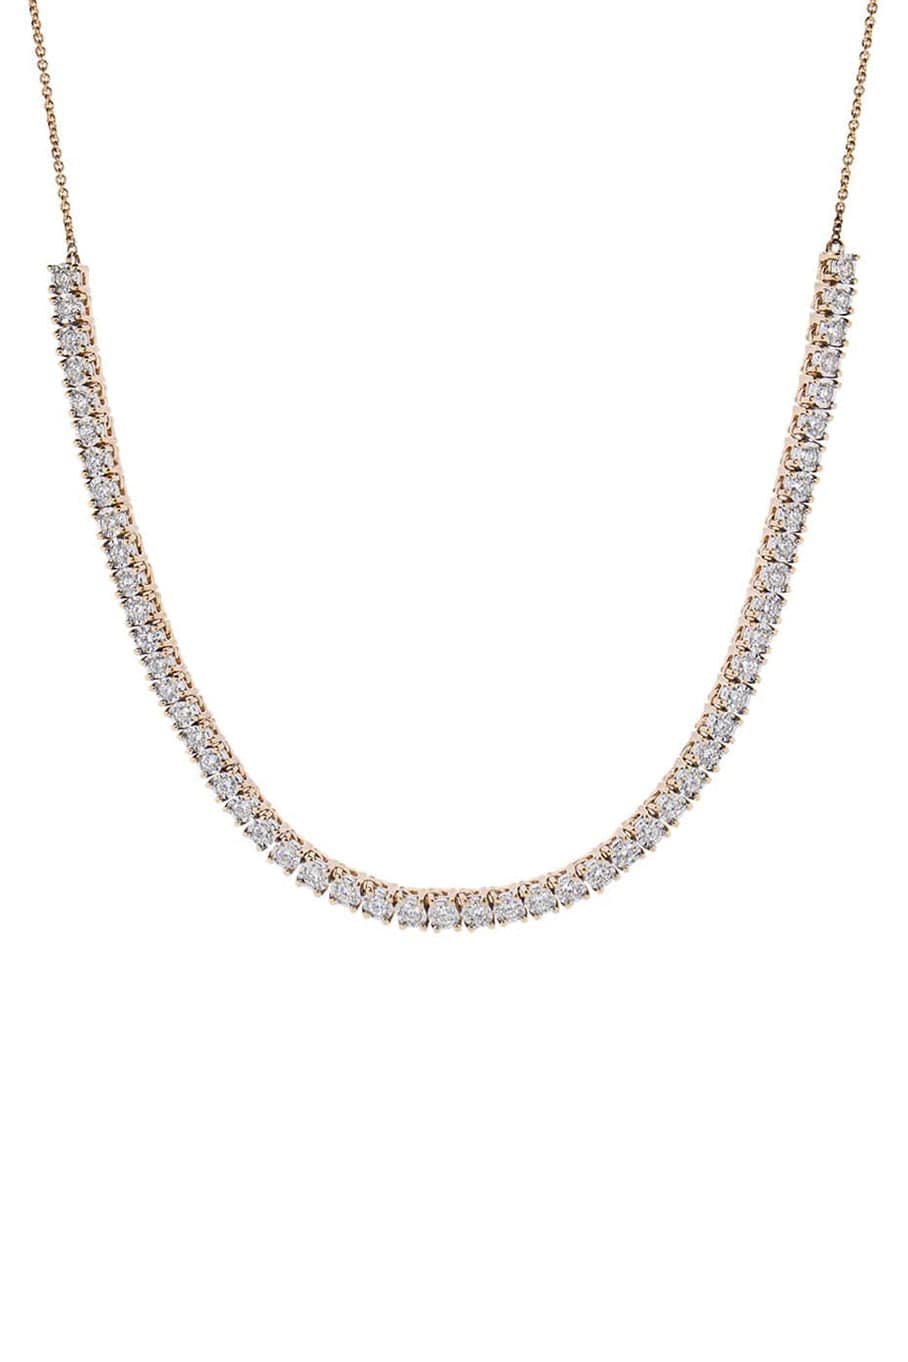 DANA REBECCA DESIGNS-Ava Bea Diamond Tennis Rose Gold Necklace-ROSE GOLD